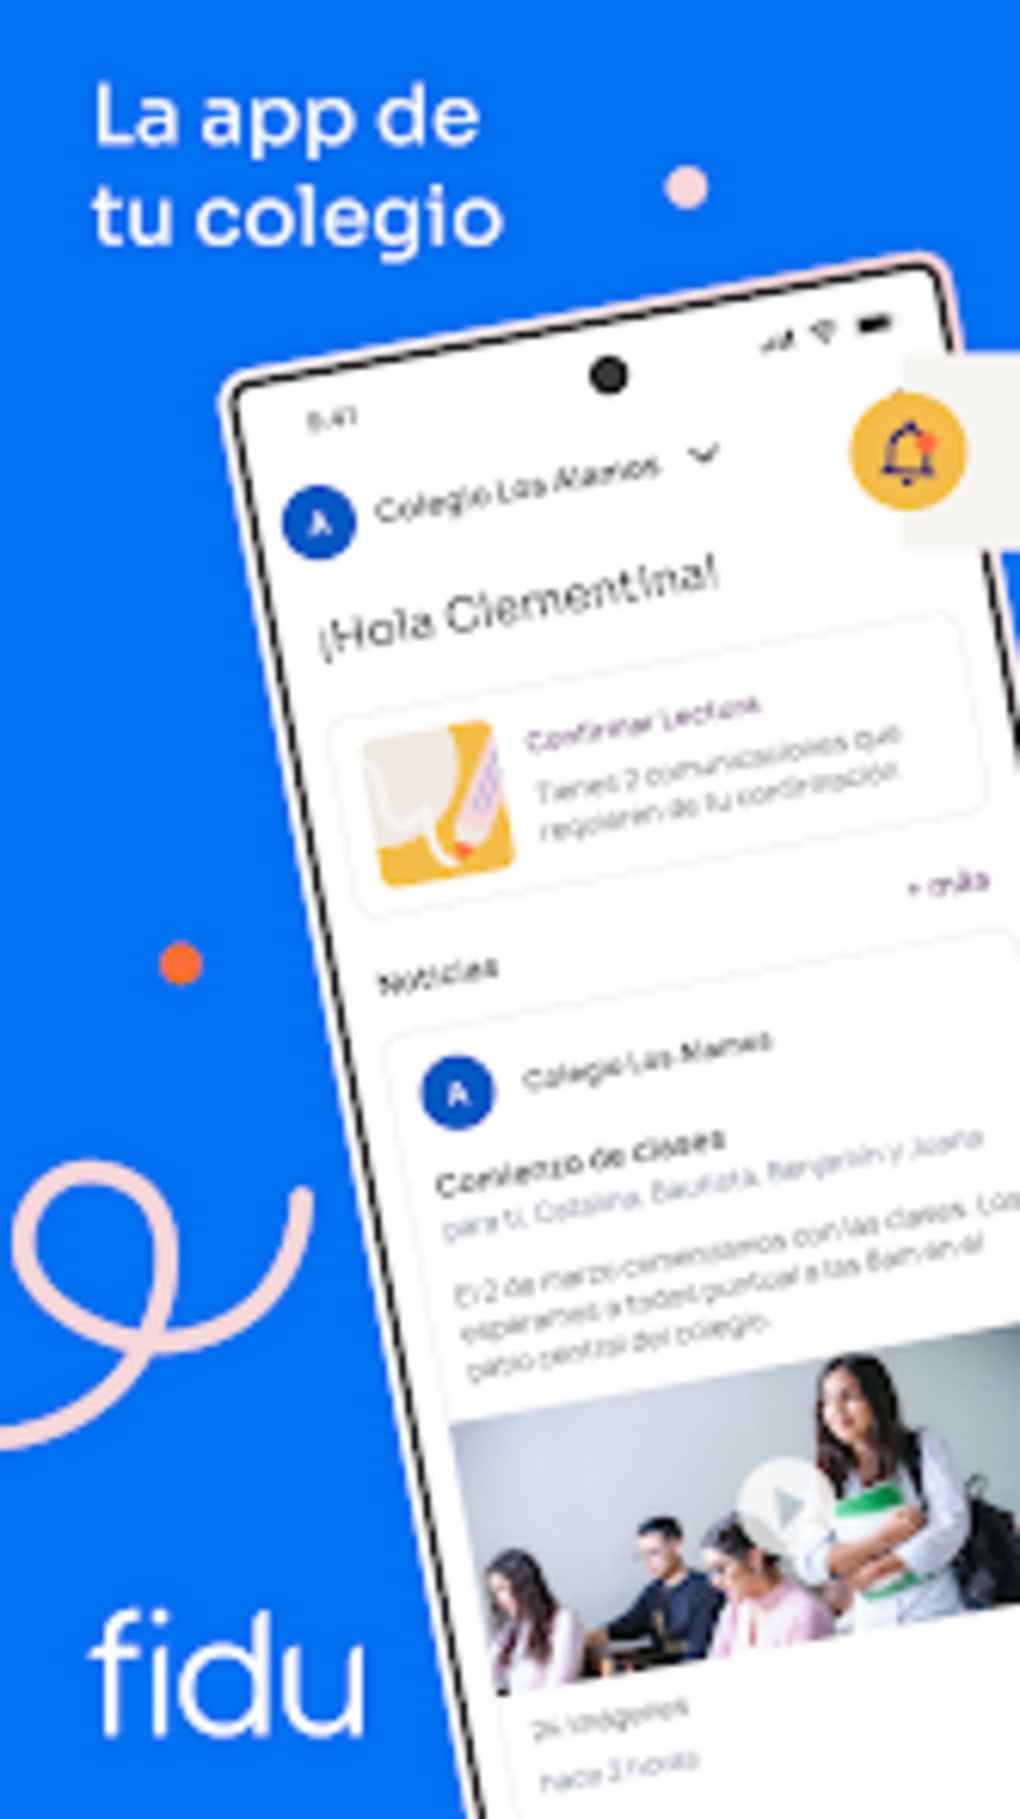 TestOpos Auxiliar Enfermería - Official app in the Microsoft Store